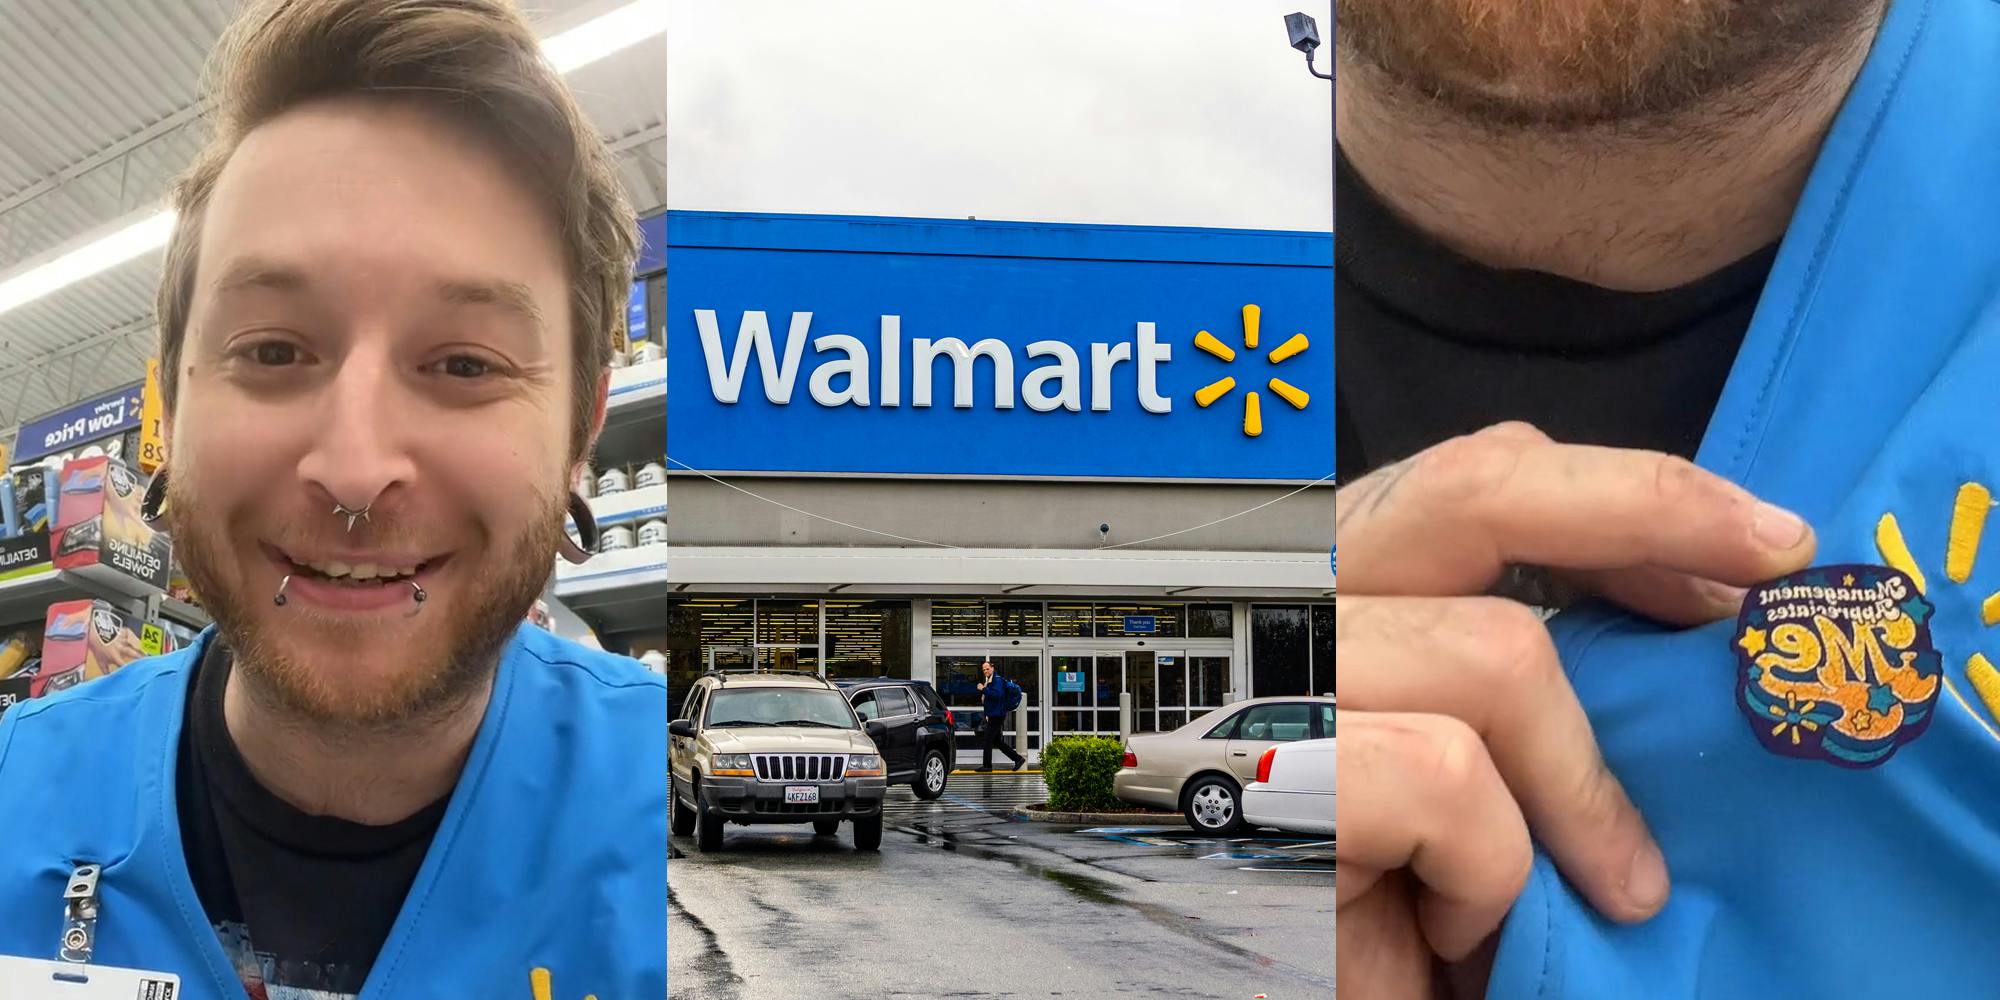 Walmart employee speaking (l) Walmart sign above building entrance (c) Walmart employee showing off pin (r)